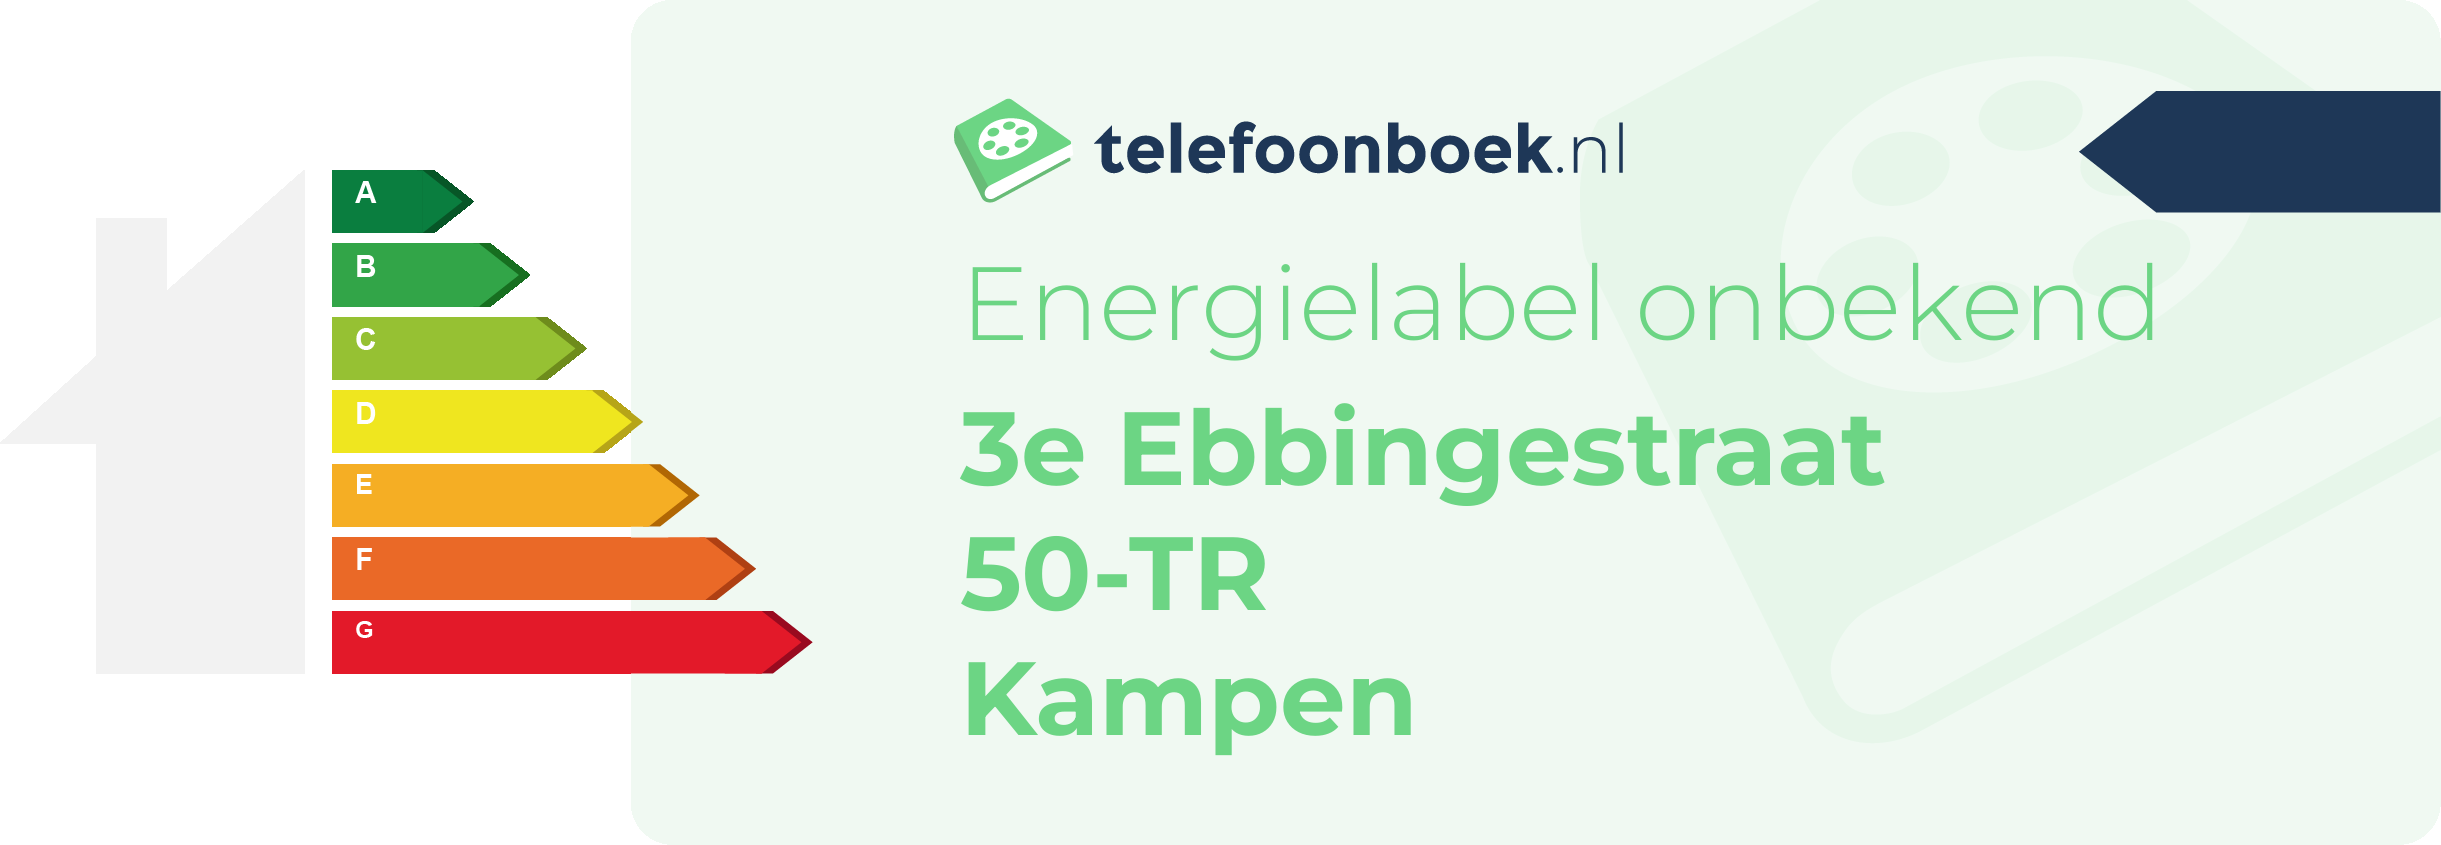 Energielabel 3e Ebbingestraat 50-TR Kampen